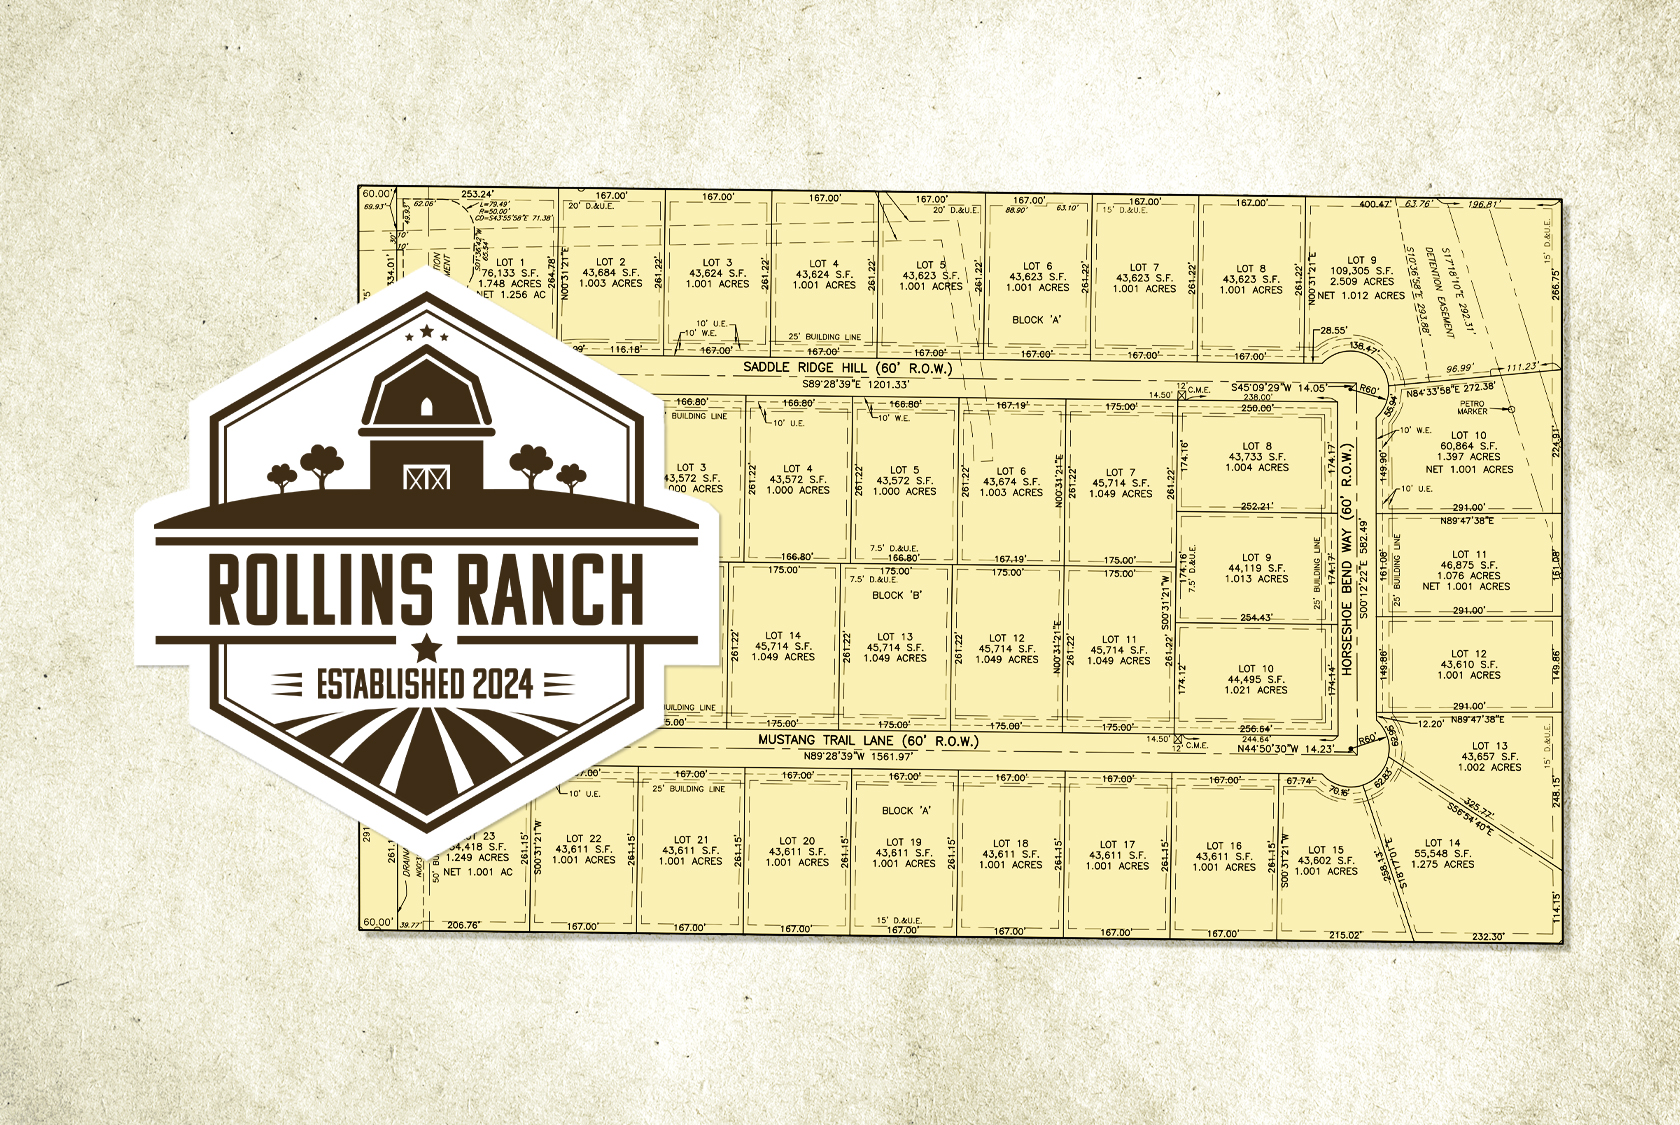 Rollins Ranch